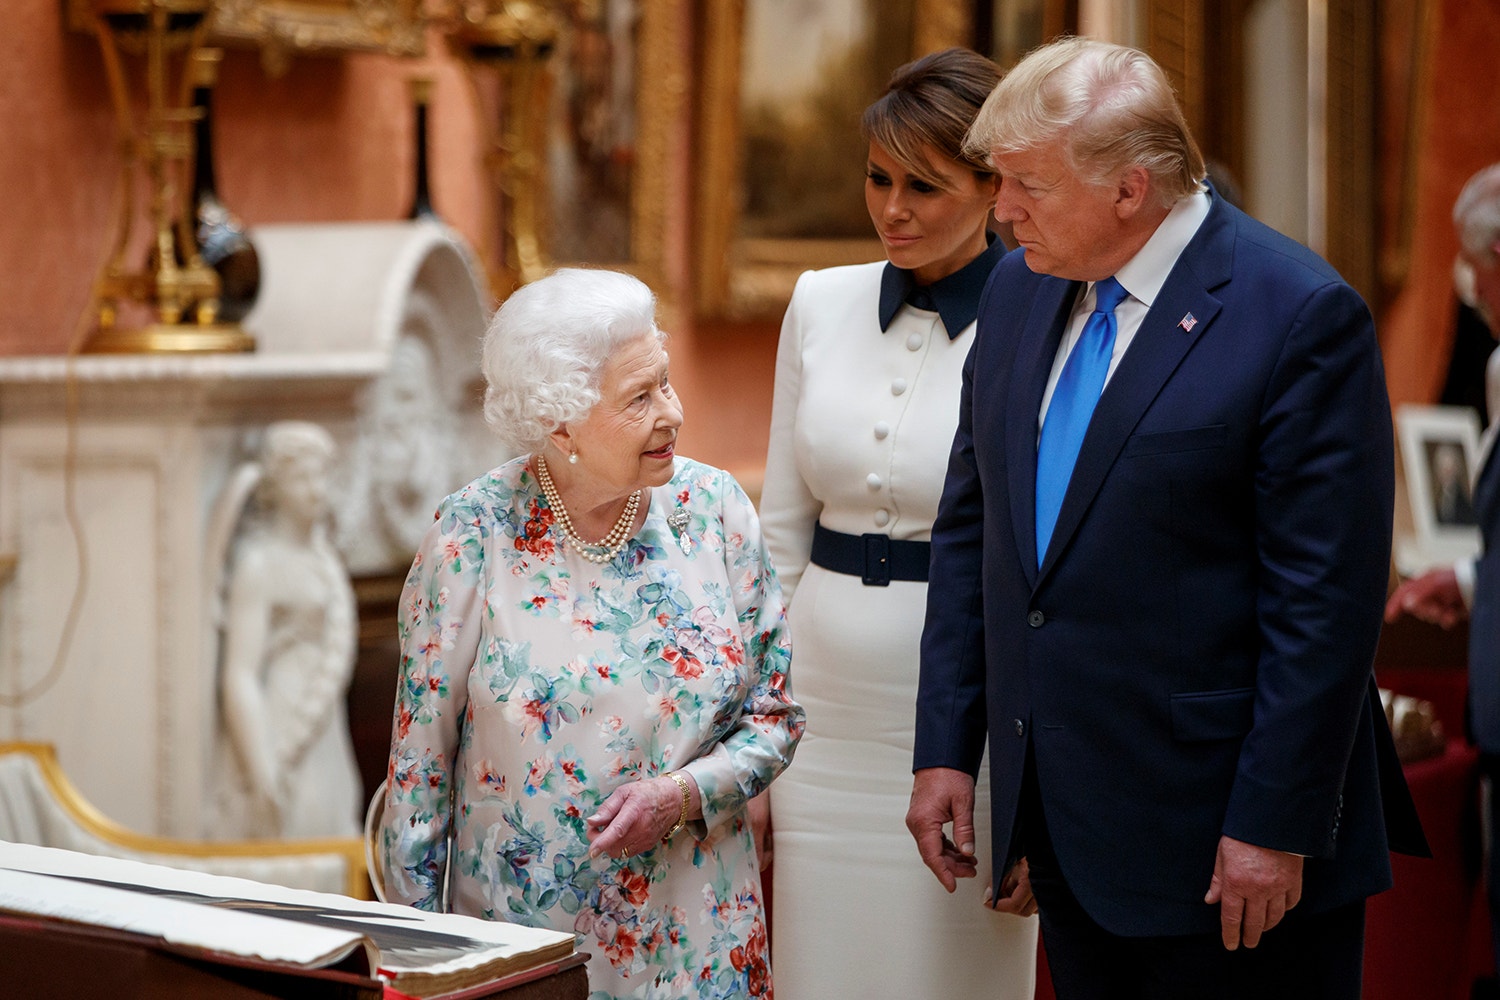  Durante a visita &agrave; resid&ecirc;ncia real, a Rainha Isabel II mostrou a cole&ccedil;&atilde;o real ao Presidente norte-americano /Ian Vogler - Reuters 